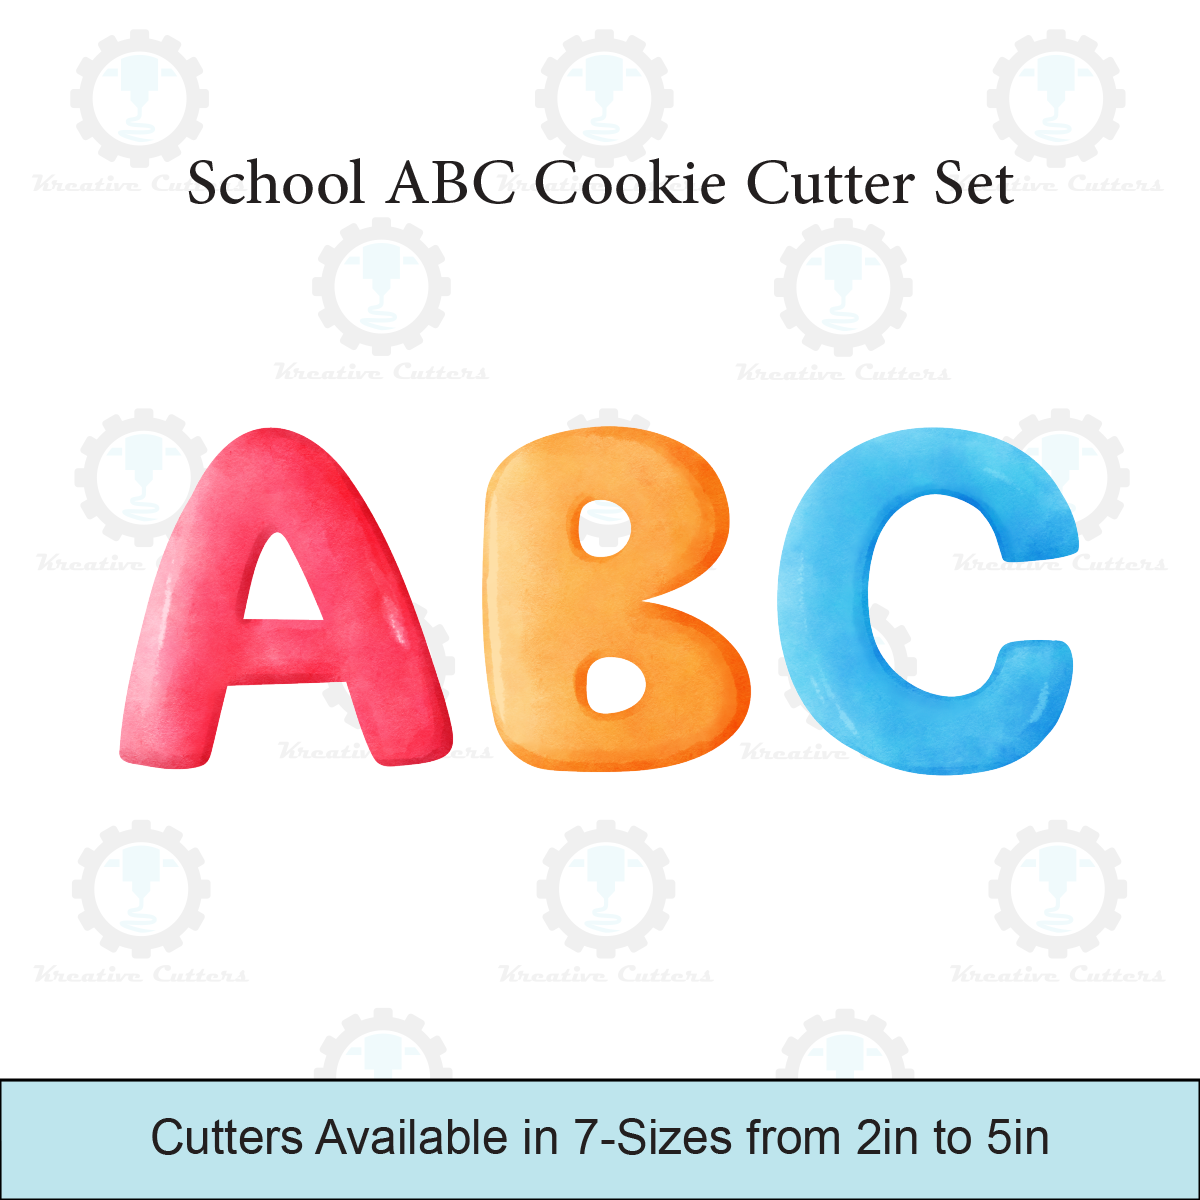 School ABC Cookie Cutter Set